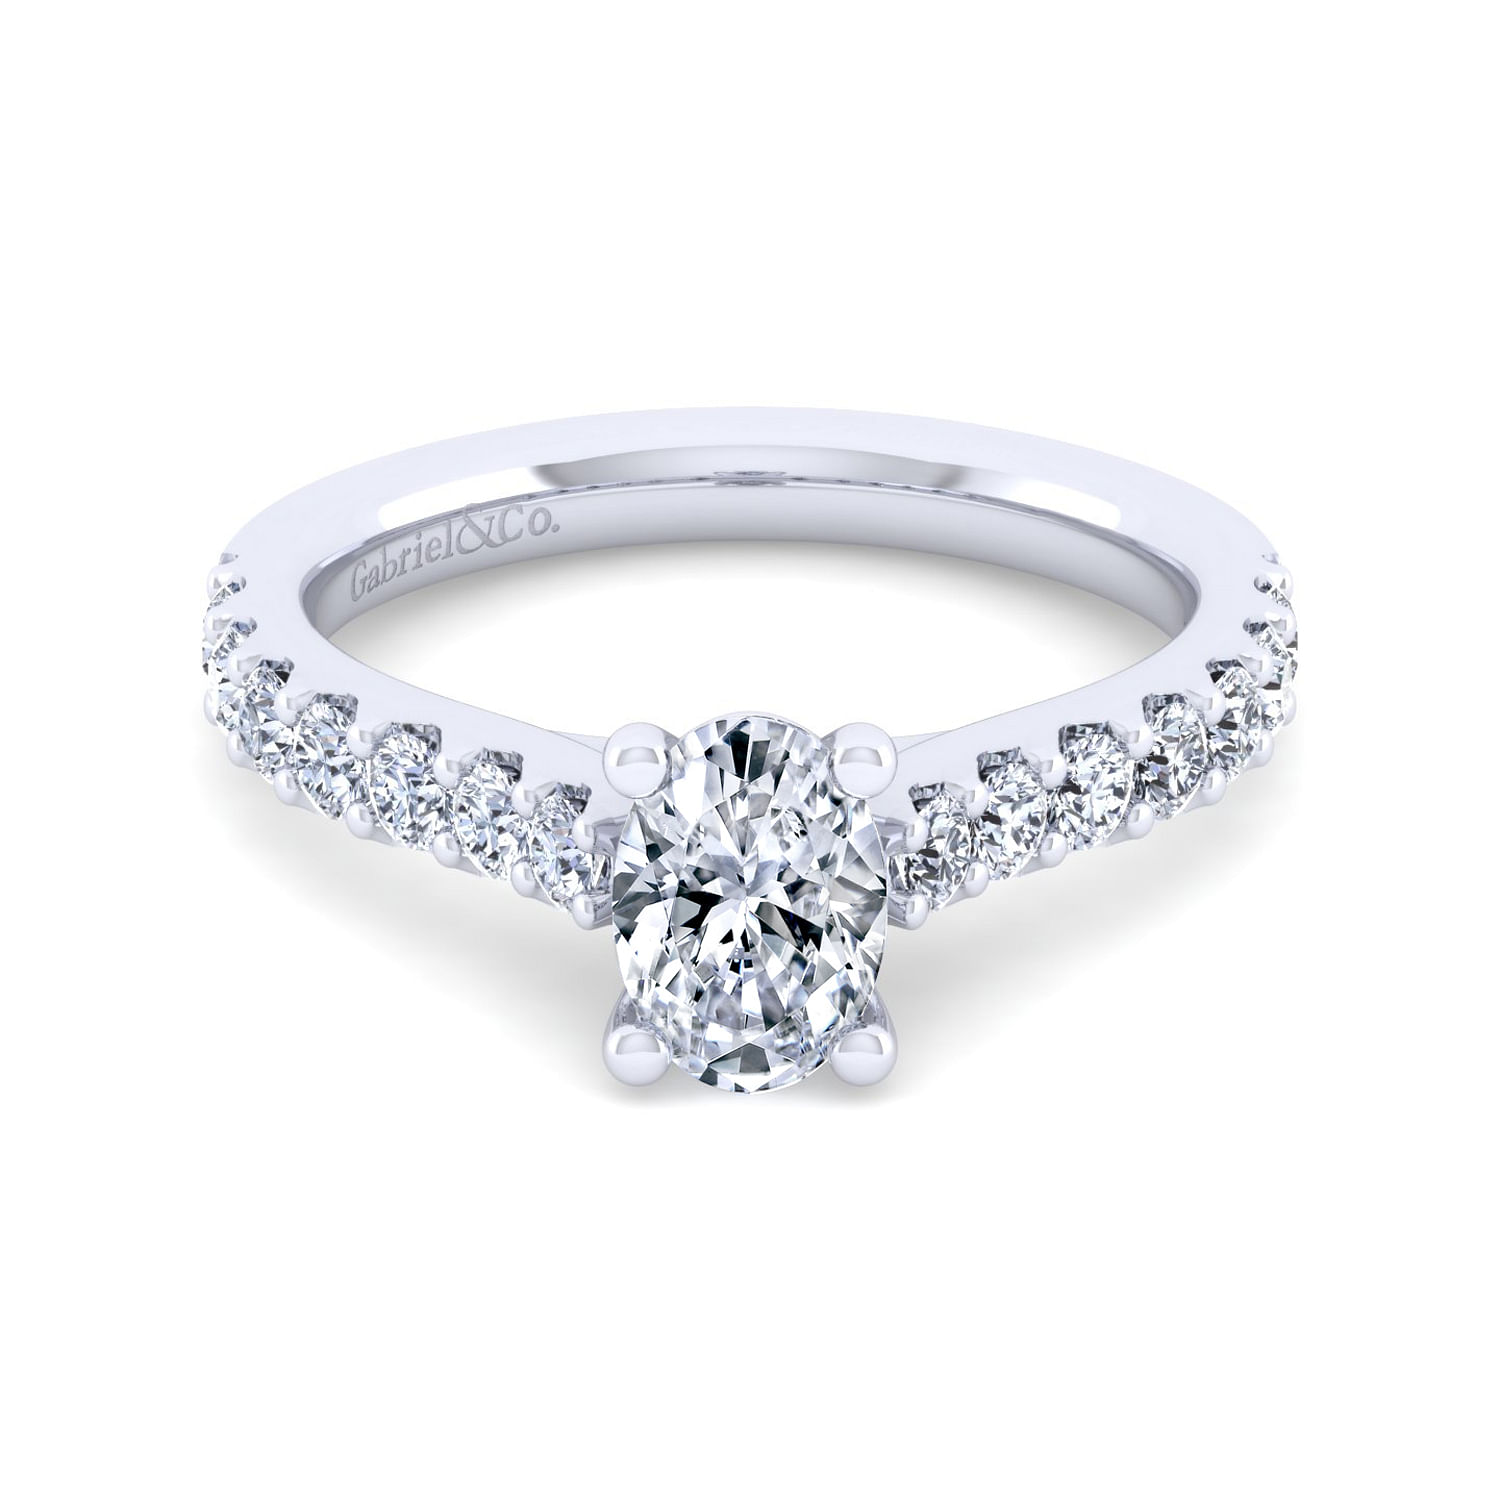 Misty---14K-White-Gold-Oval-Diamond-Engagement-Ring1